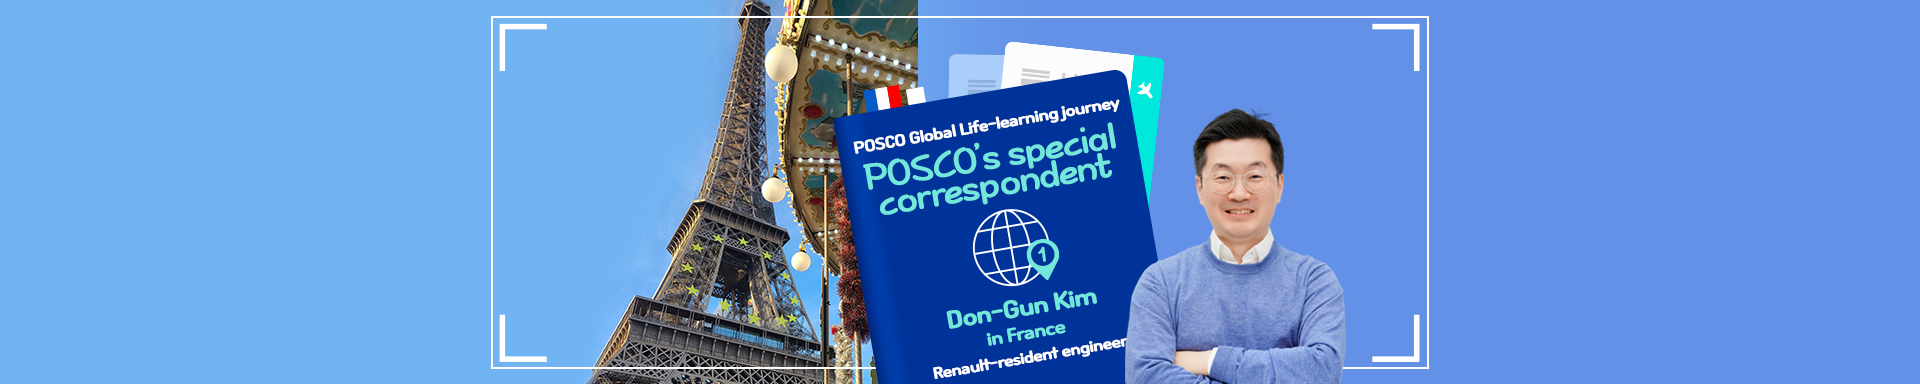 POSCO’s special correspondent in ① France Don-Gun Kim, Renault-resident engineer